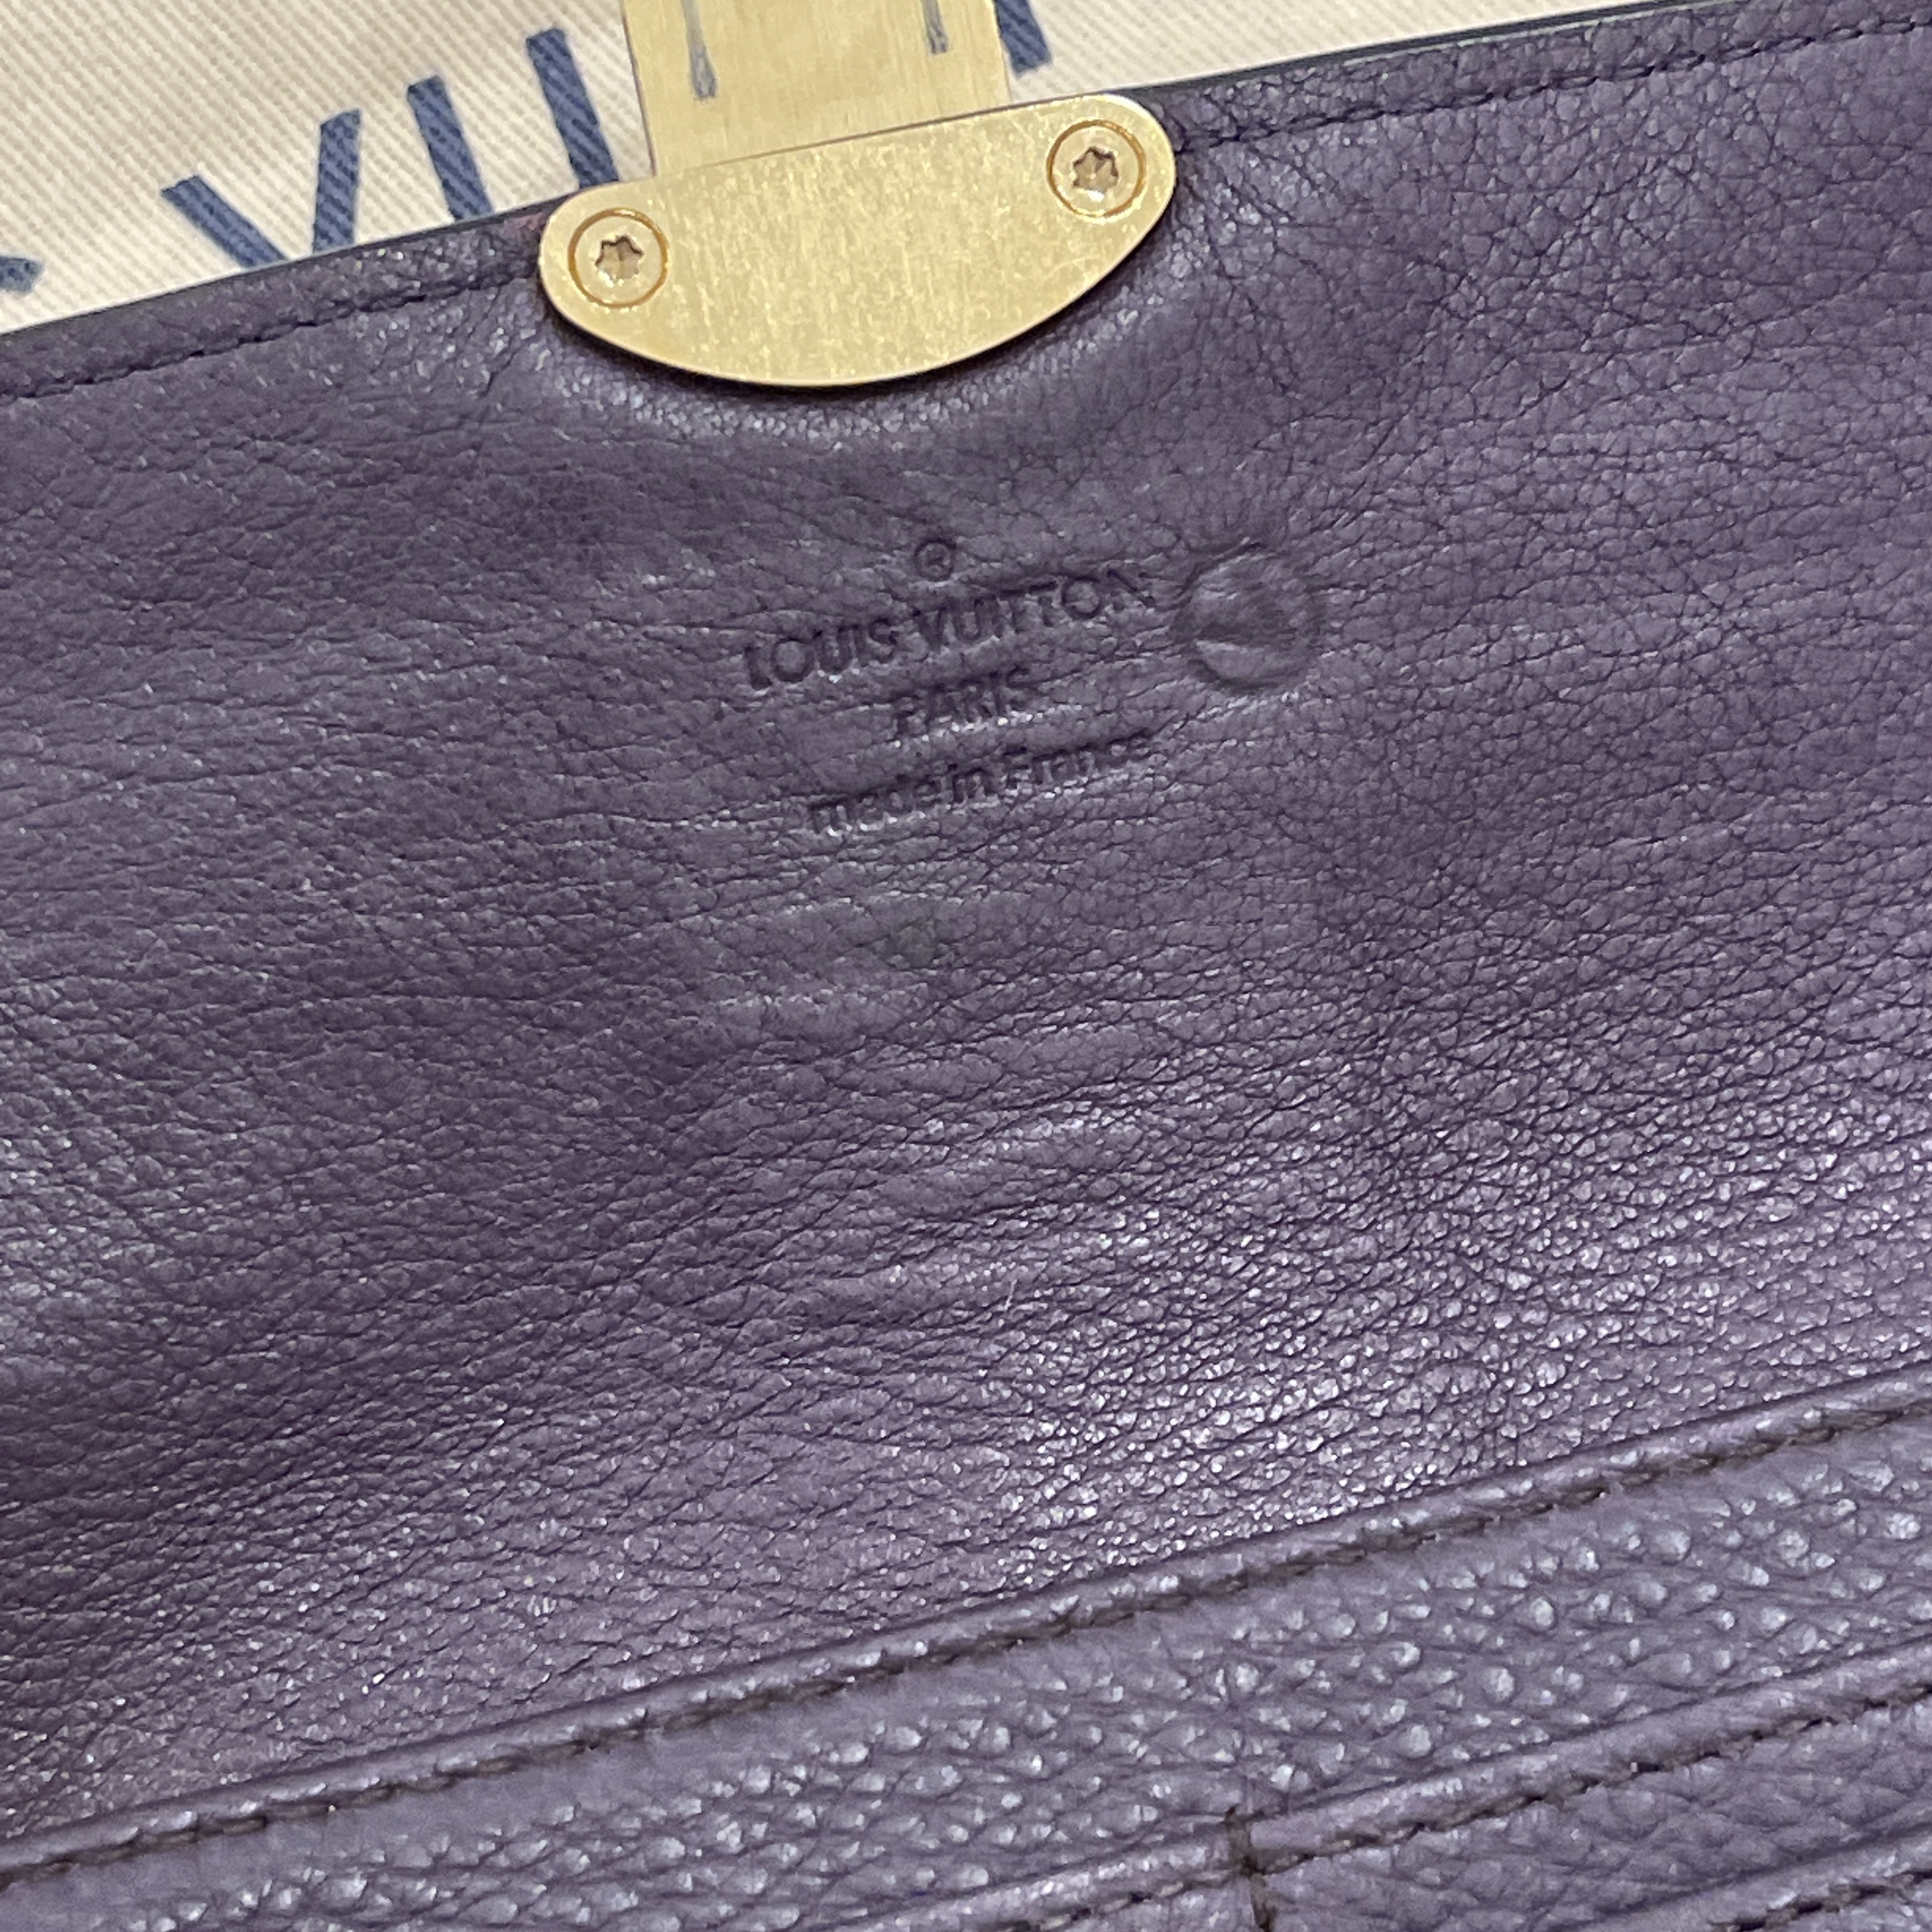 Louis Vuitton Mahina Leather Amelia Wallet - Neutrals Wallets